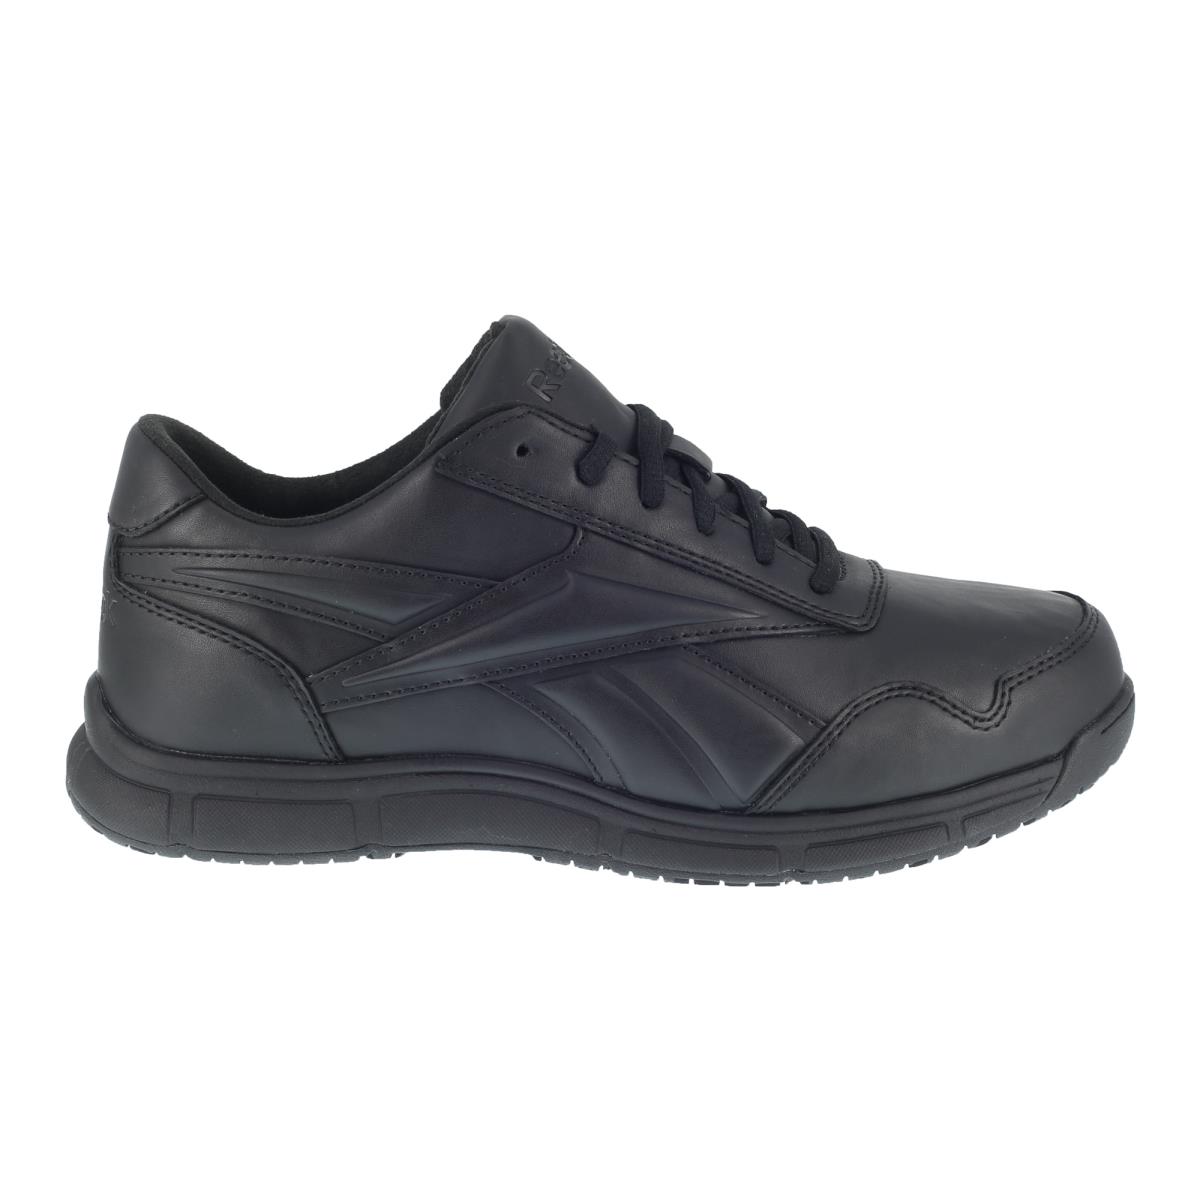 Reebok Womens Black Leather Work Shoes Jorie LT SR Oxford M